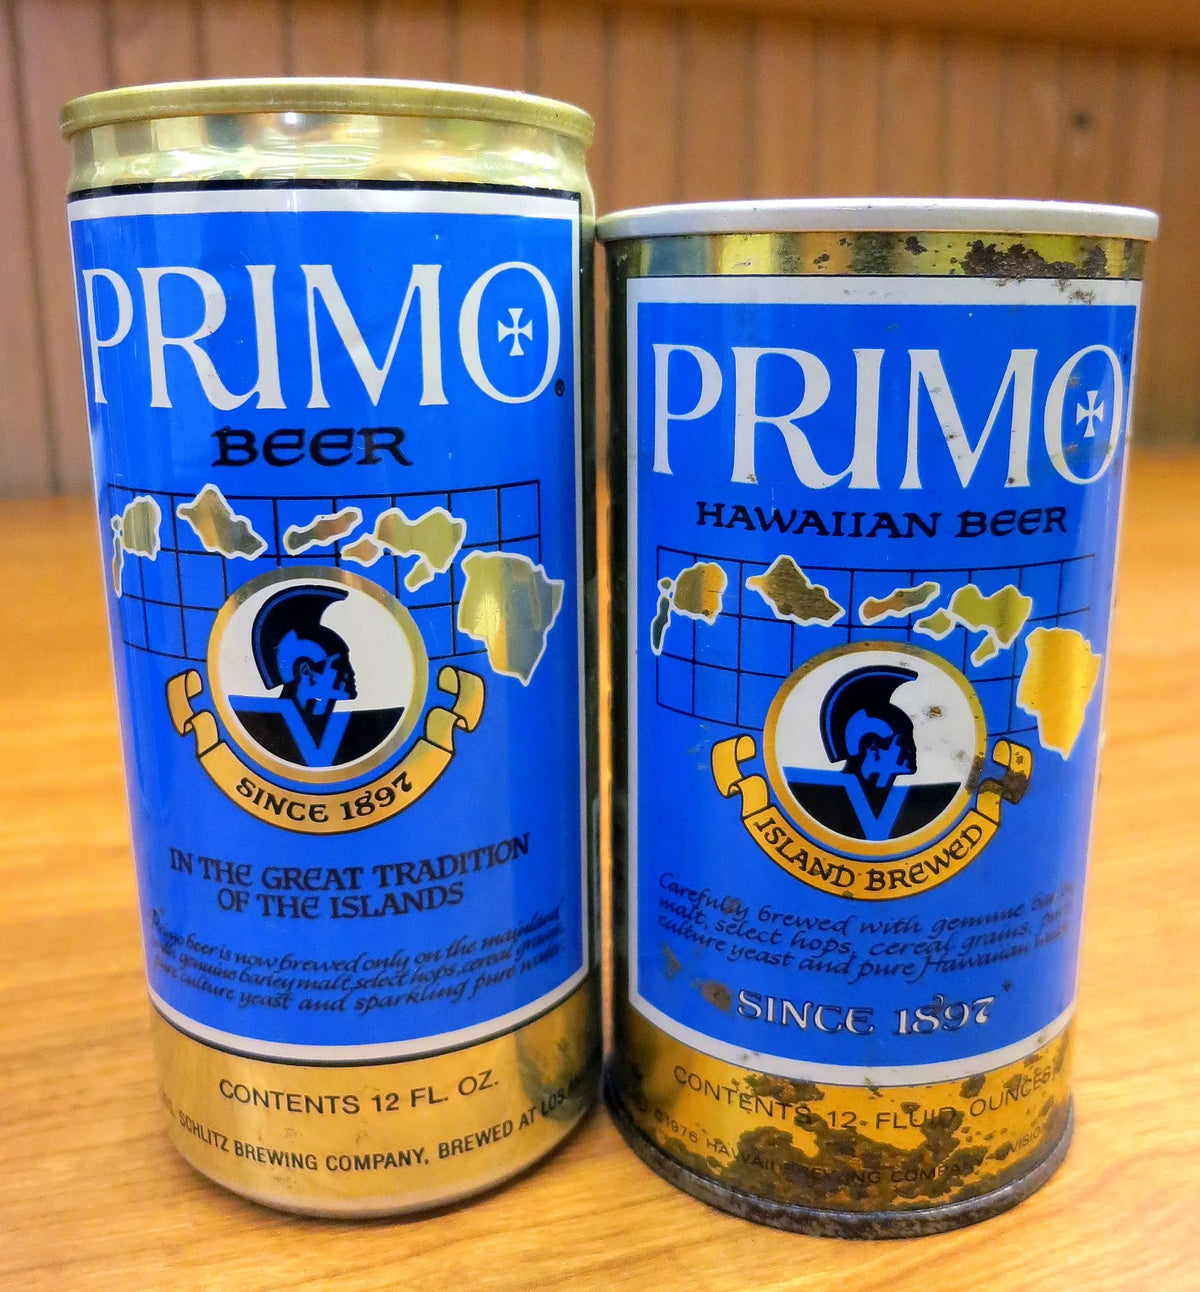 Primo Beer: A Taste of Hawaiian Brewing History